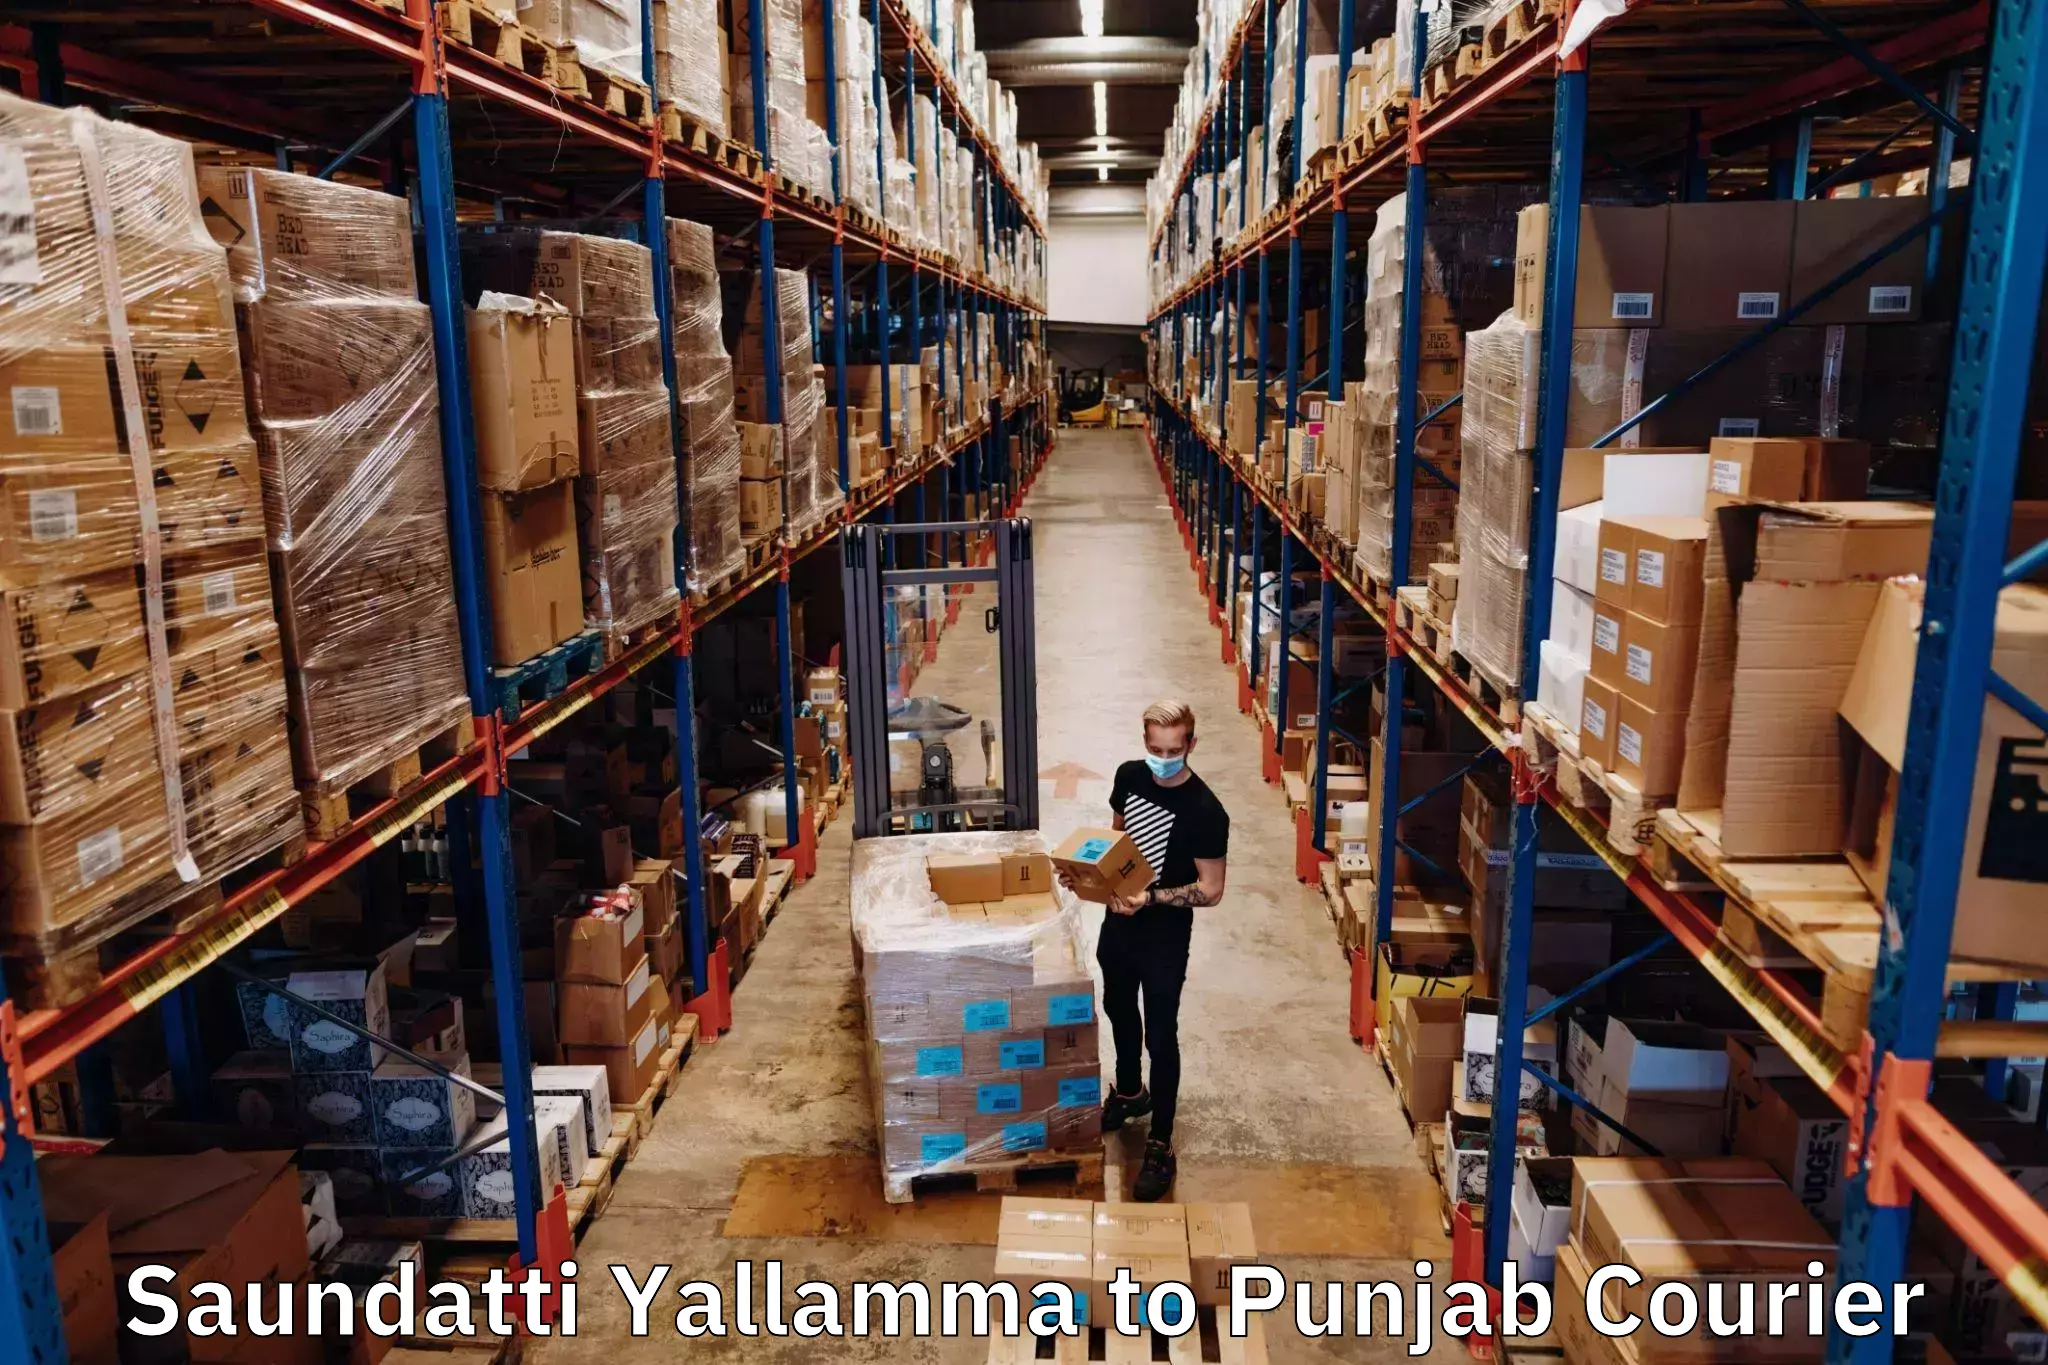 Professional courier handling Saundatti Yallamma to Bathinda